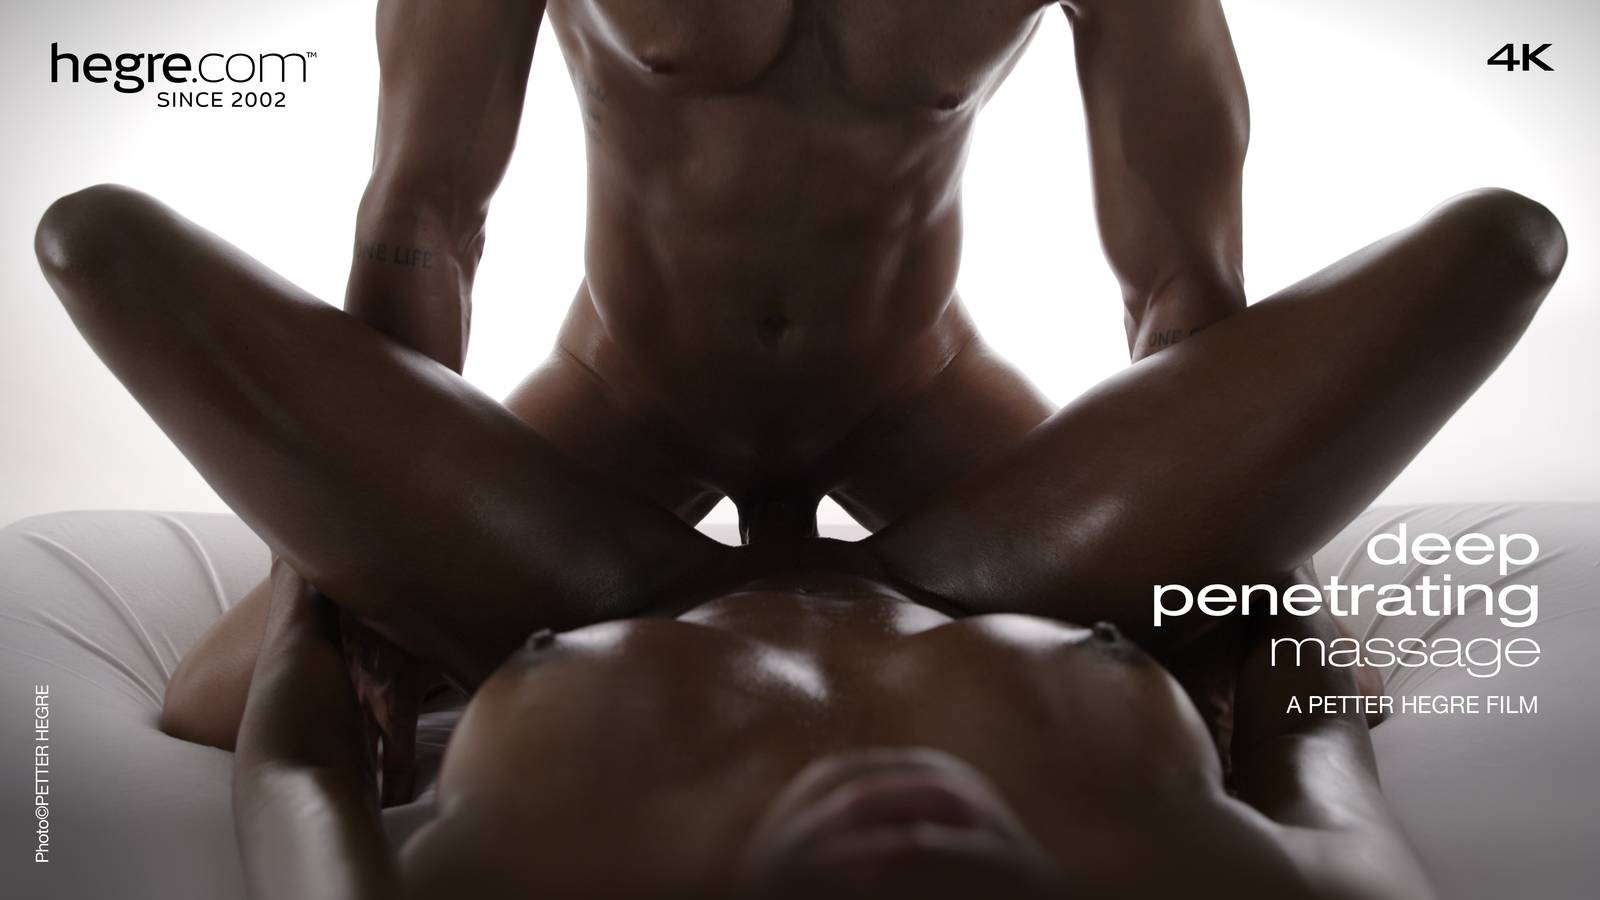 ahilan siva add deep penetrative massage photo